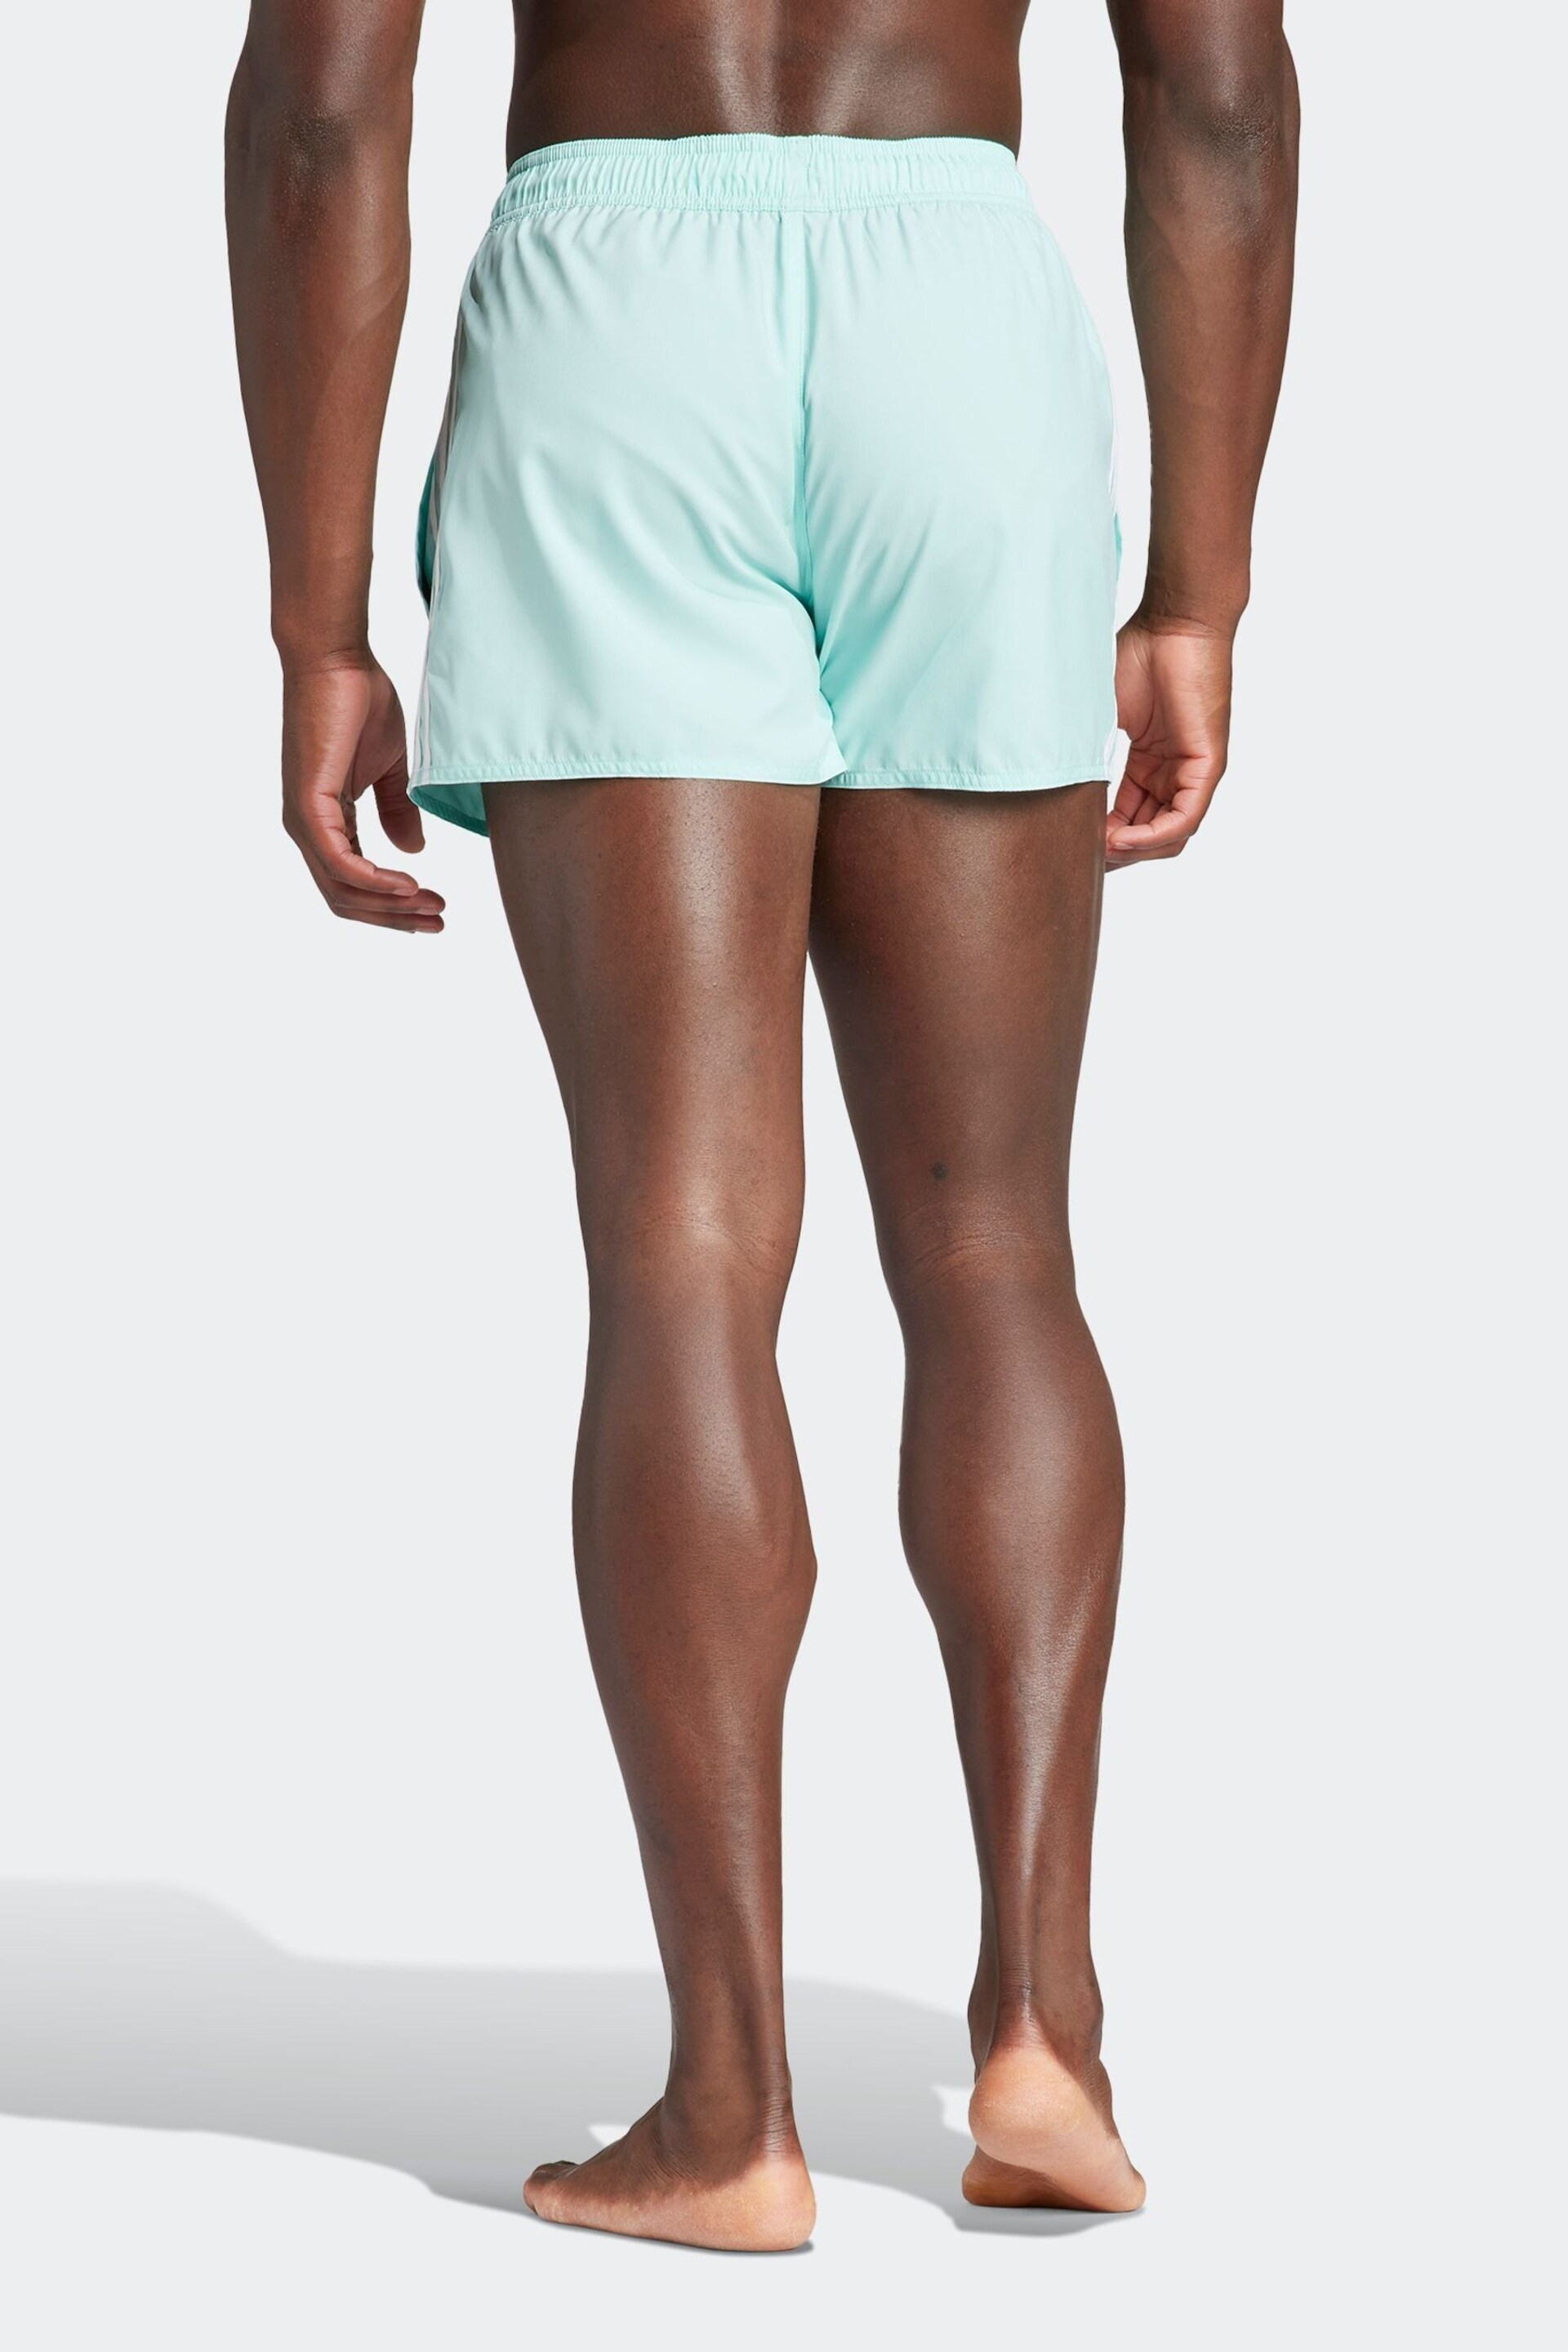 adidas Light Green 3-Stripes CLX Very Short Length Swim Shorts - Image 2 of 6